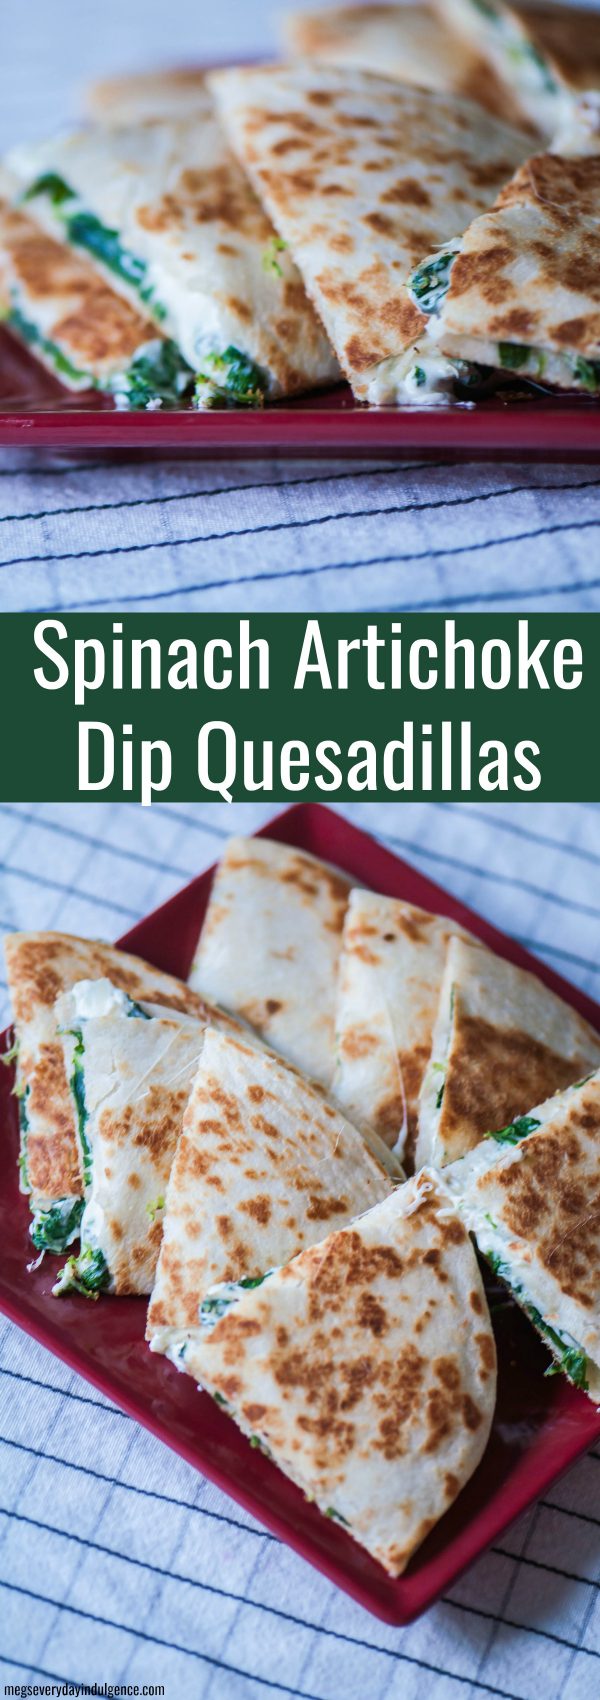 Spinach Artichoke Dip Quesadillas - Meg's Everyday Indulgence